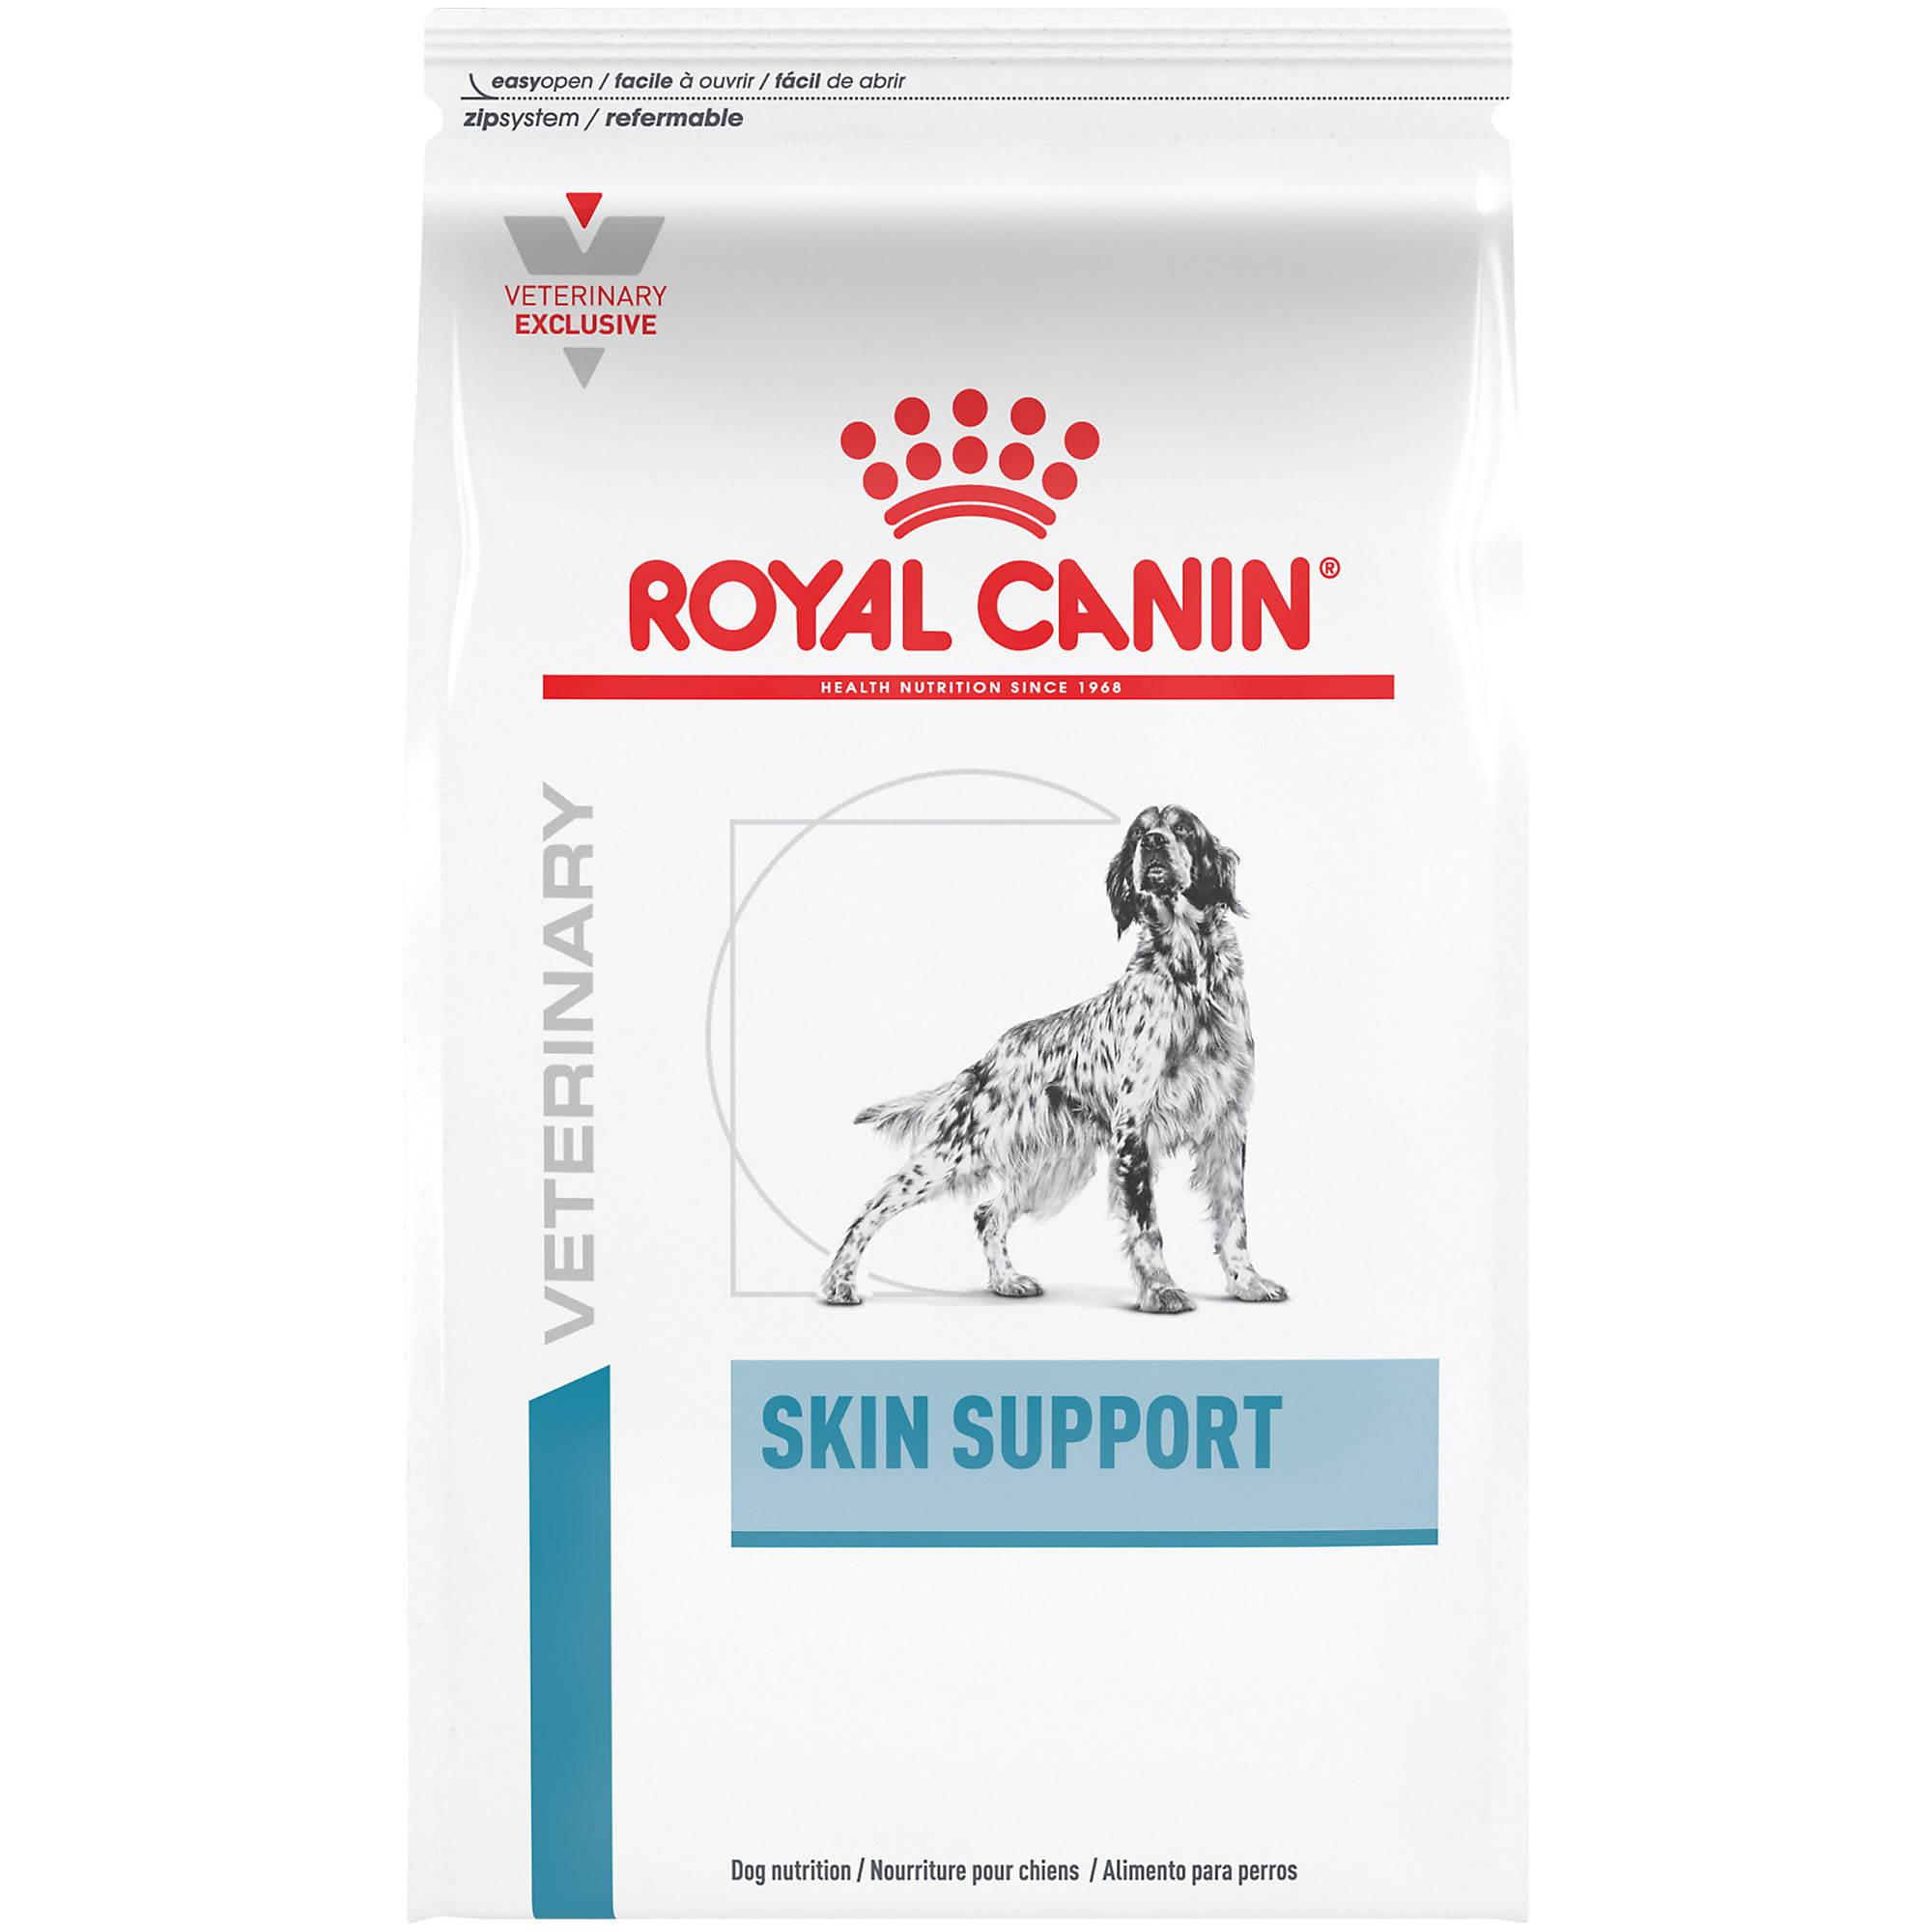 royal canin dog food price comparison